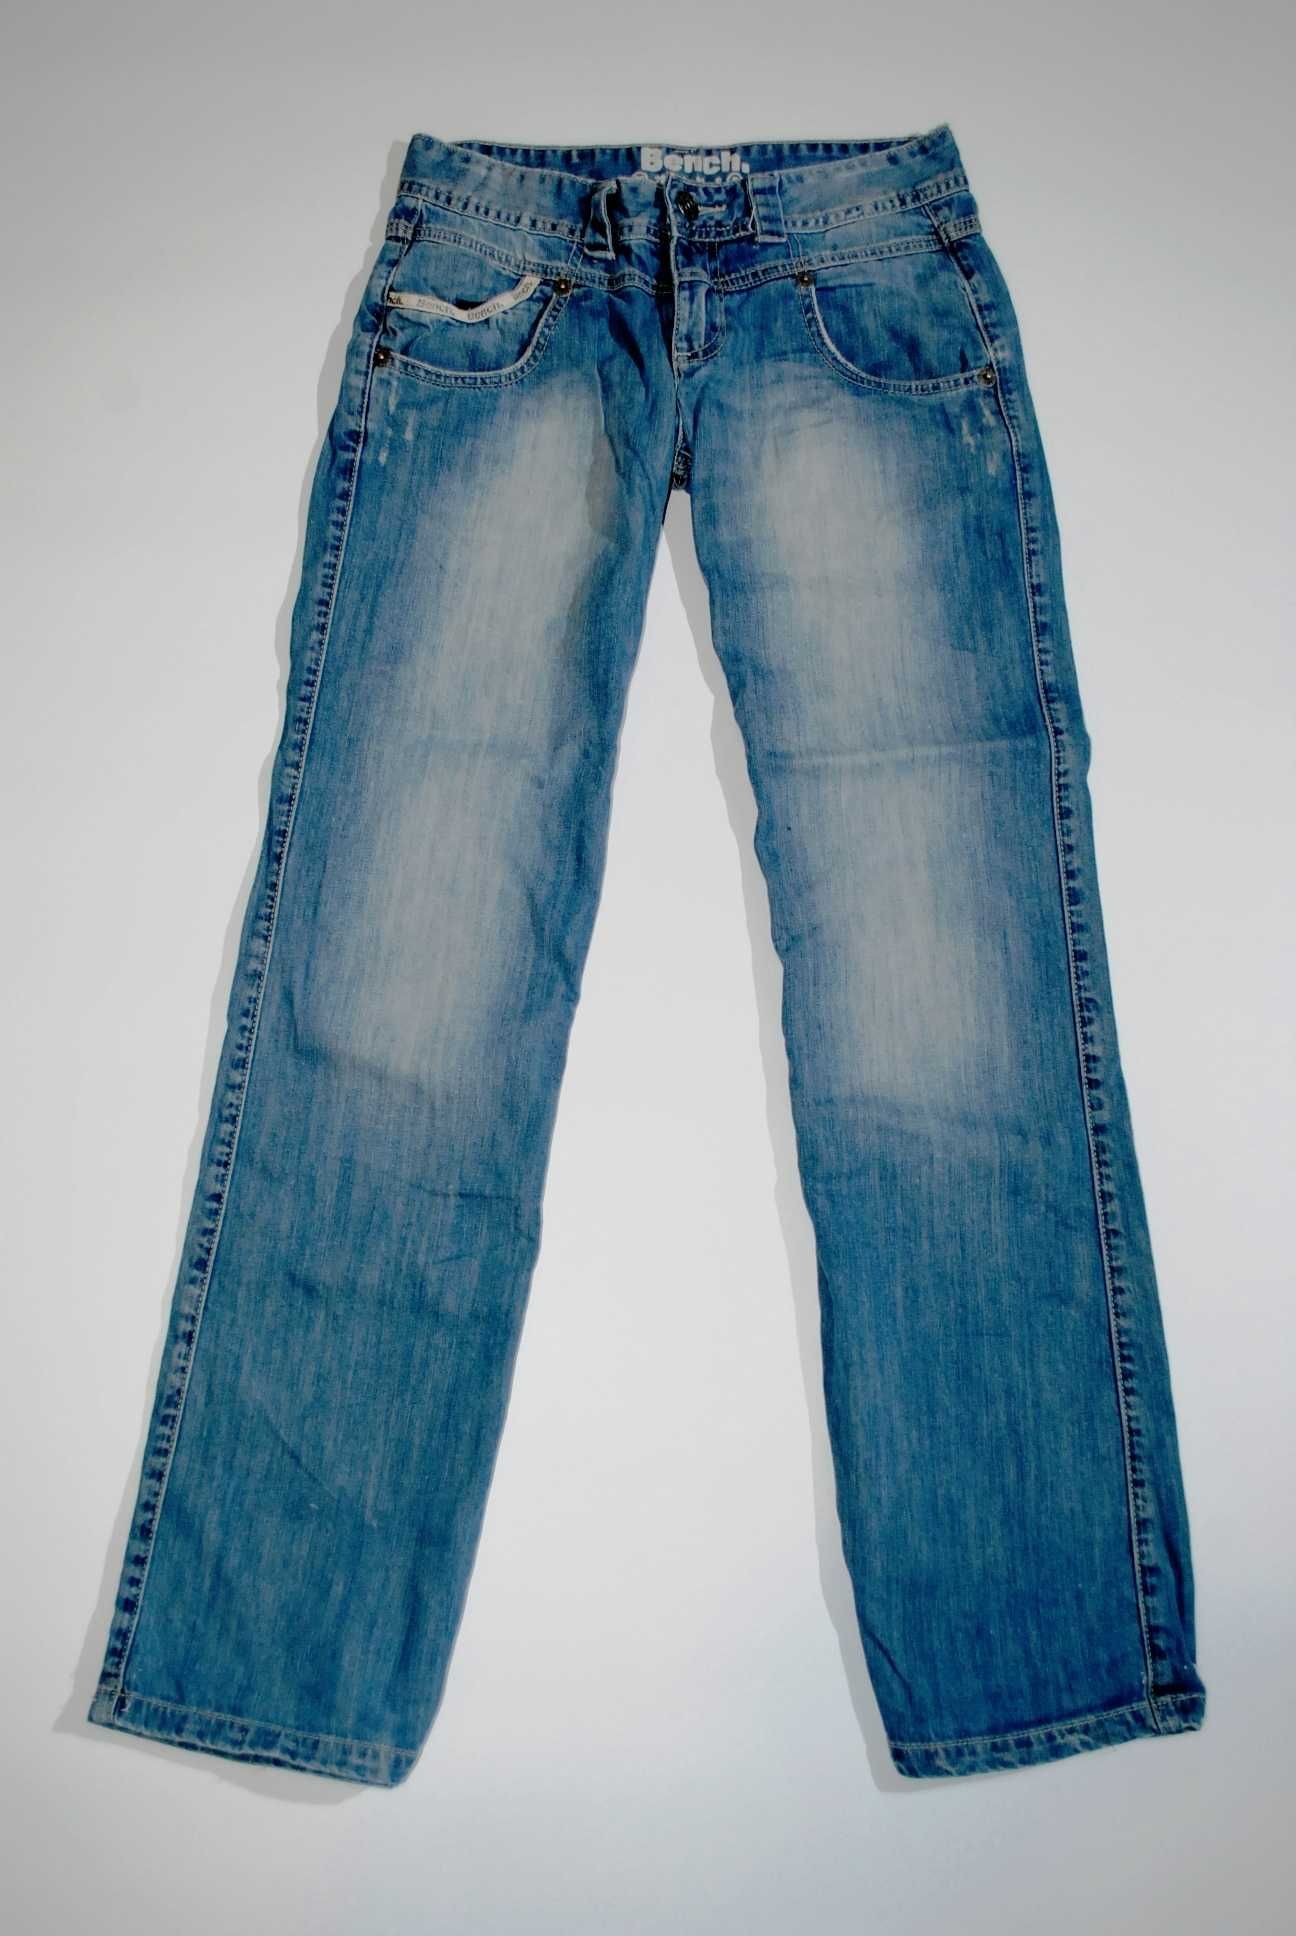 джинсы женские синие бренд BENCH S / 26 Англия бойфренды широкие